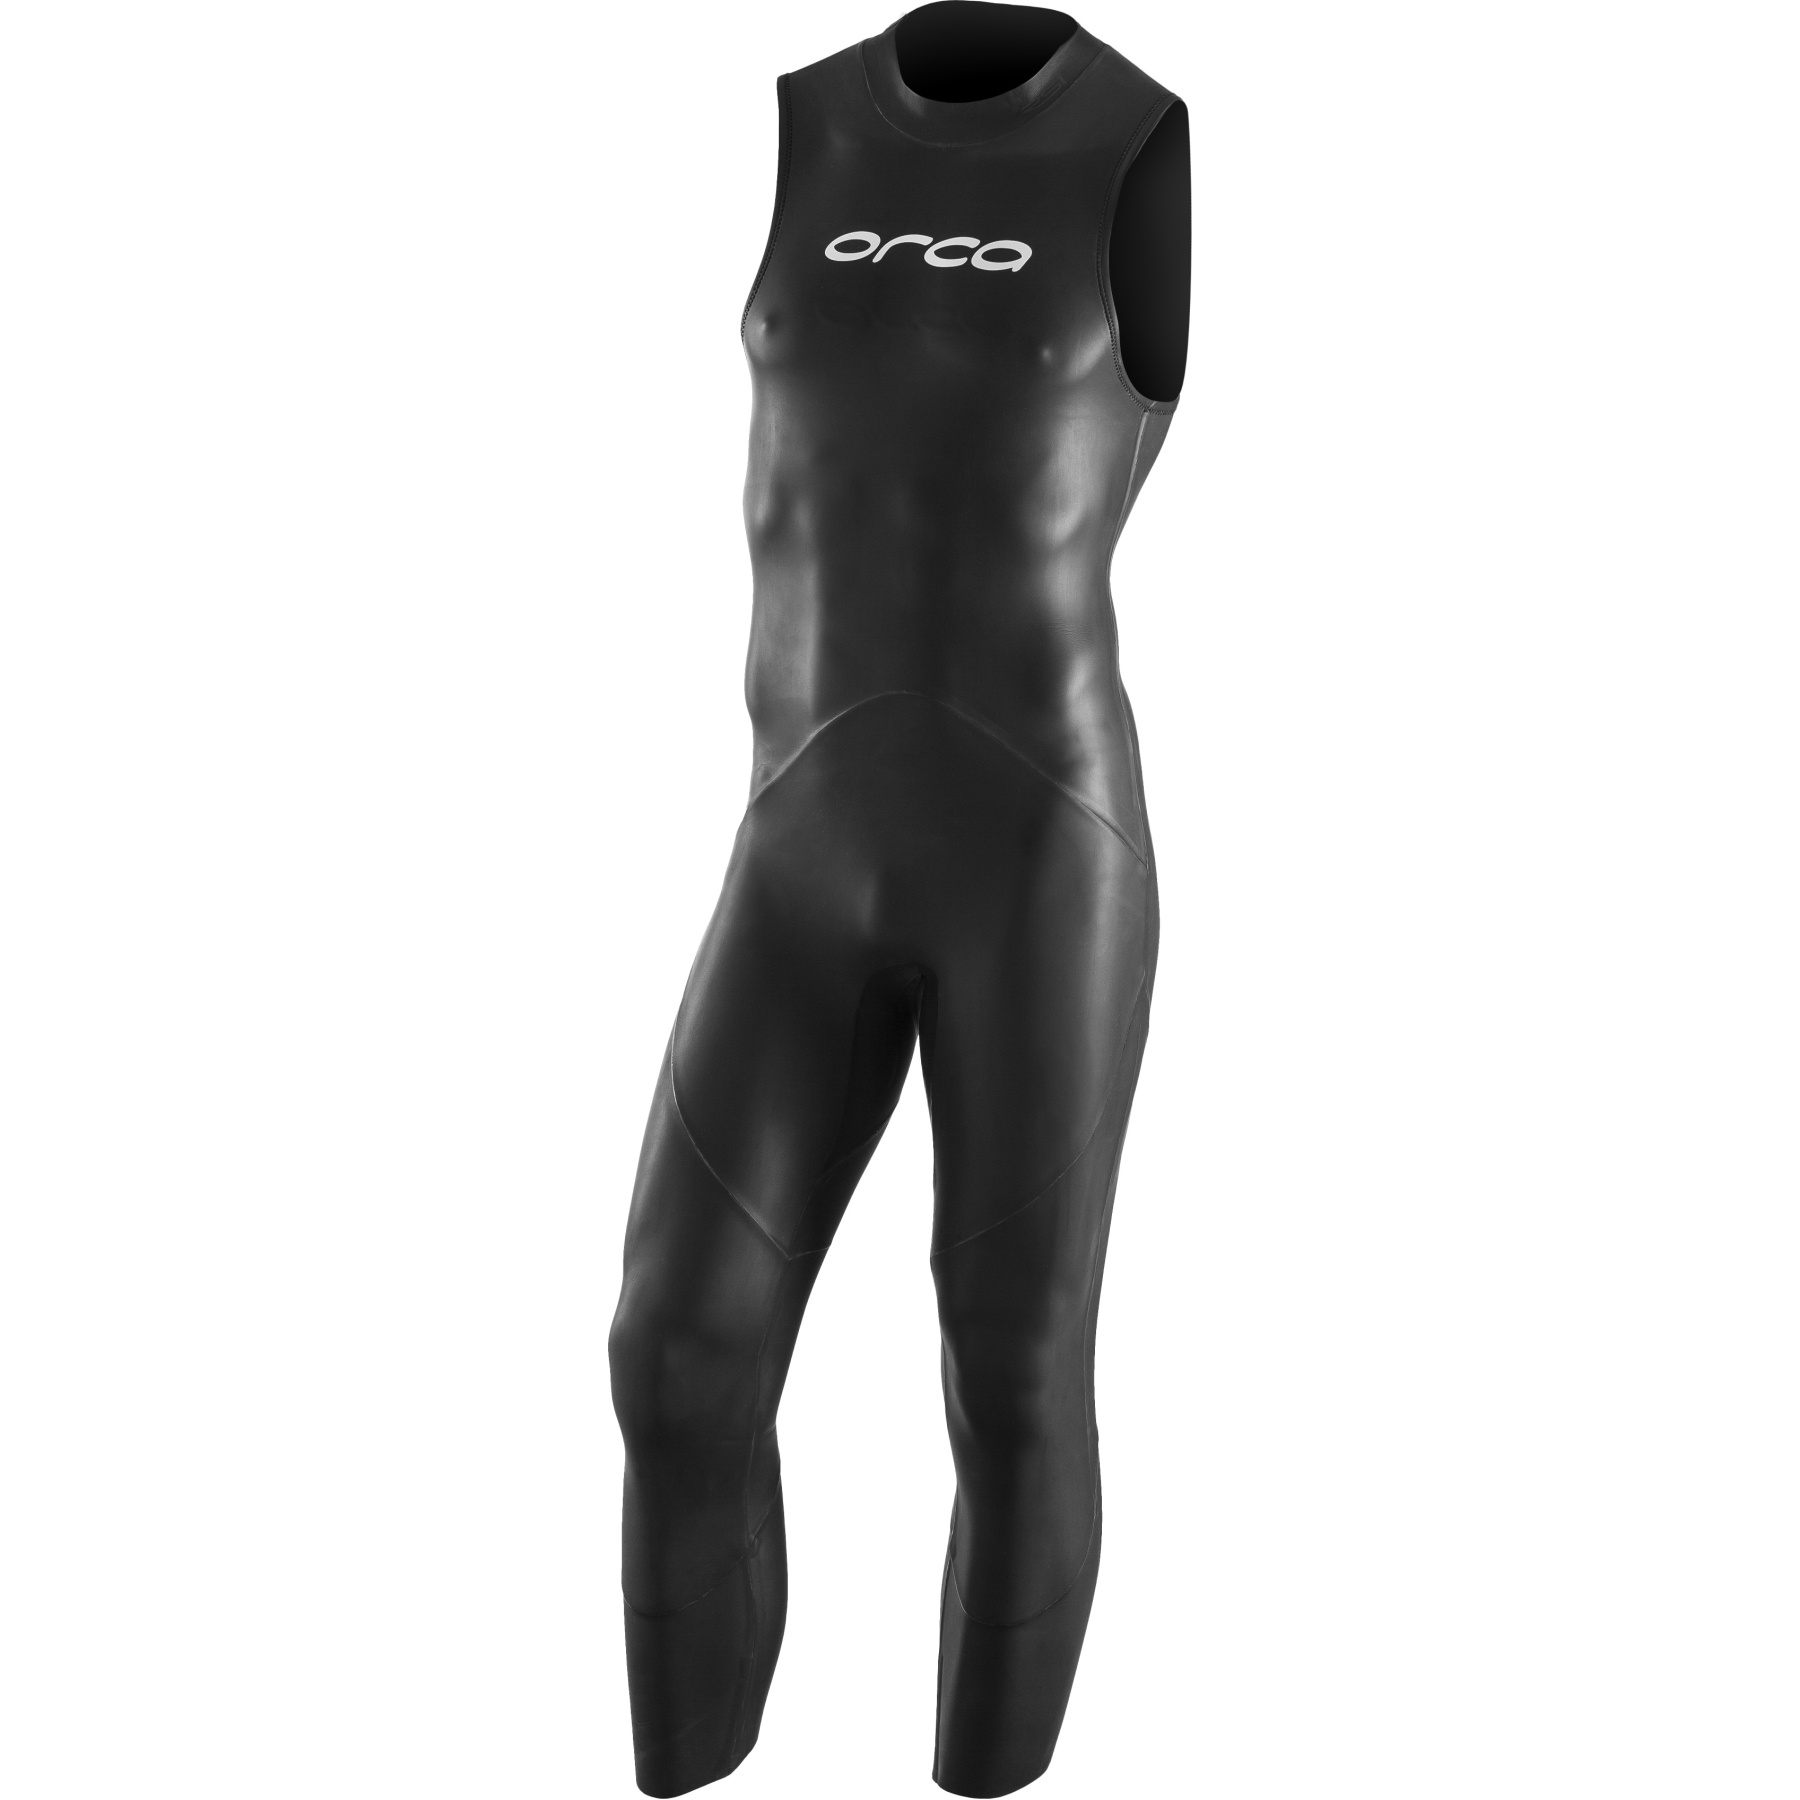 Productfoto van Orca RS1 Openwater Sleeveless Wetsuit - black